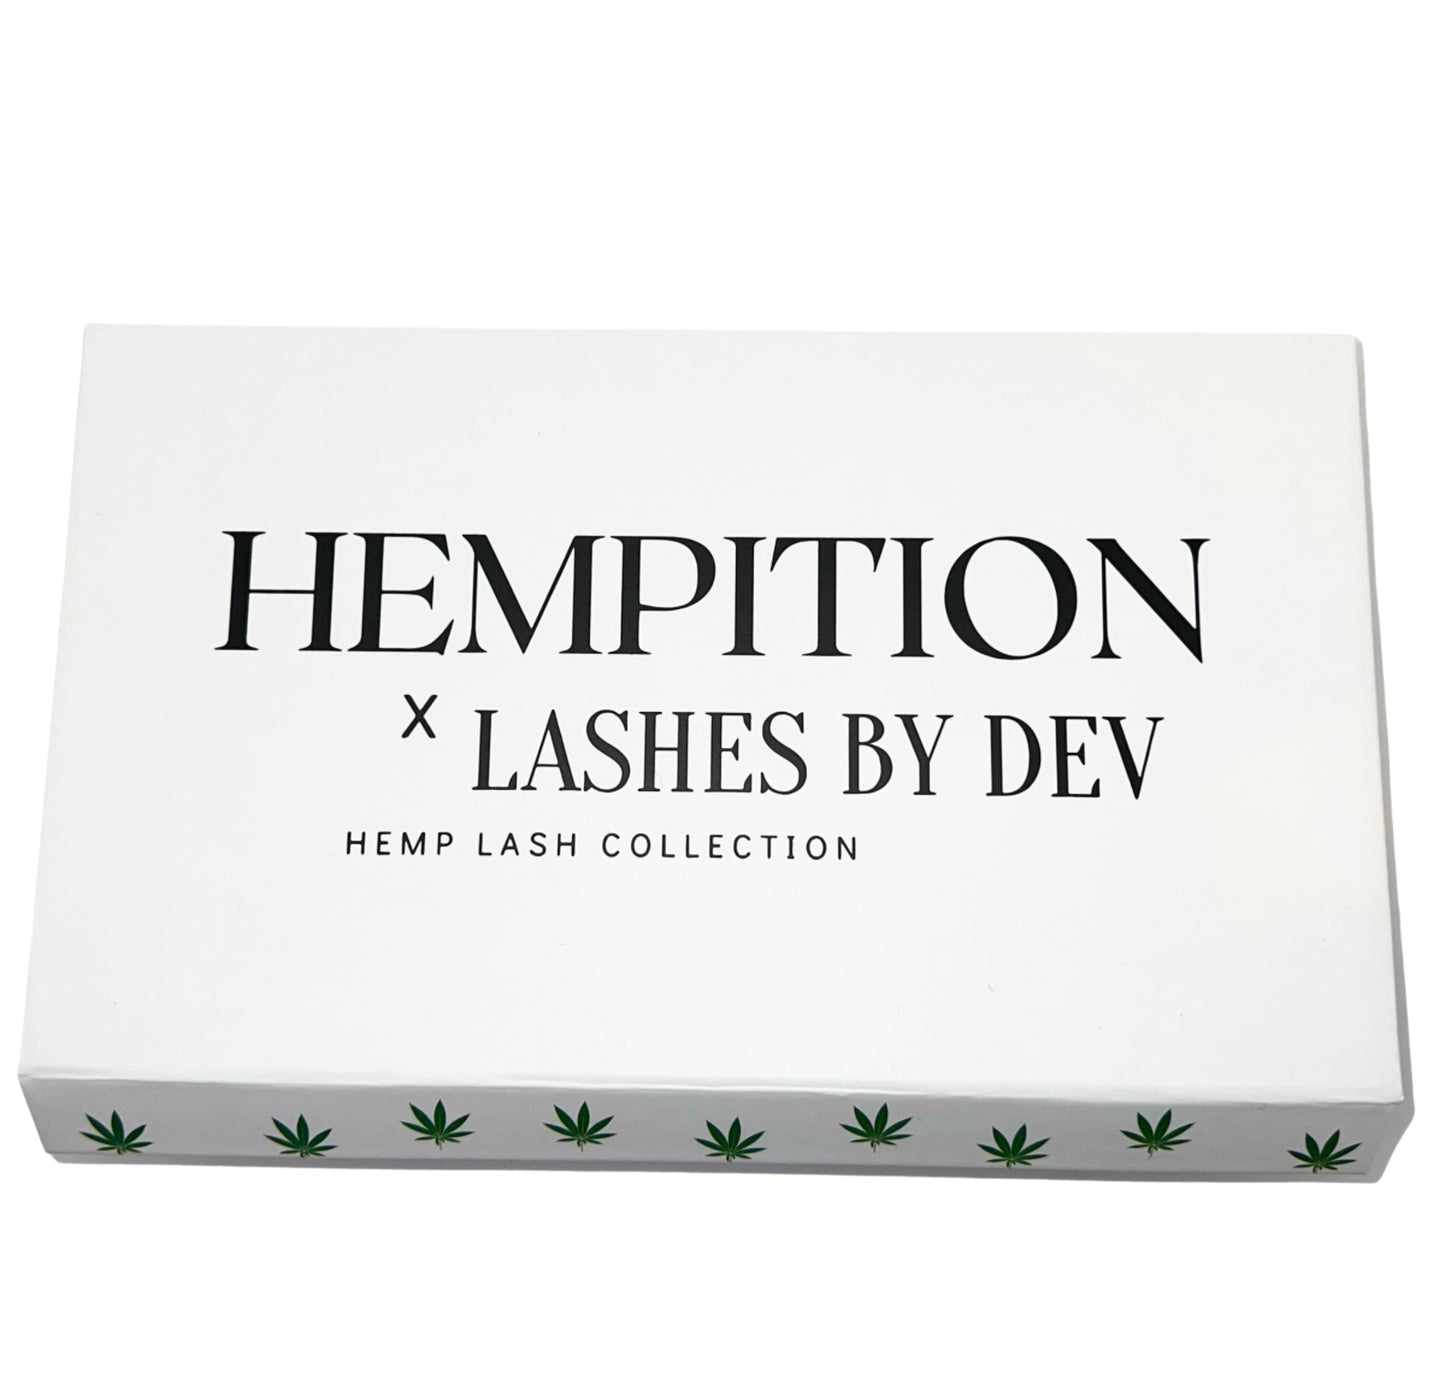 Hemp Lash Collection